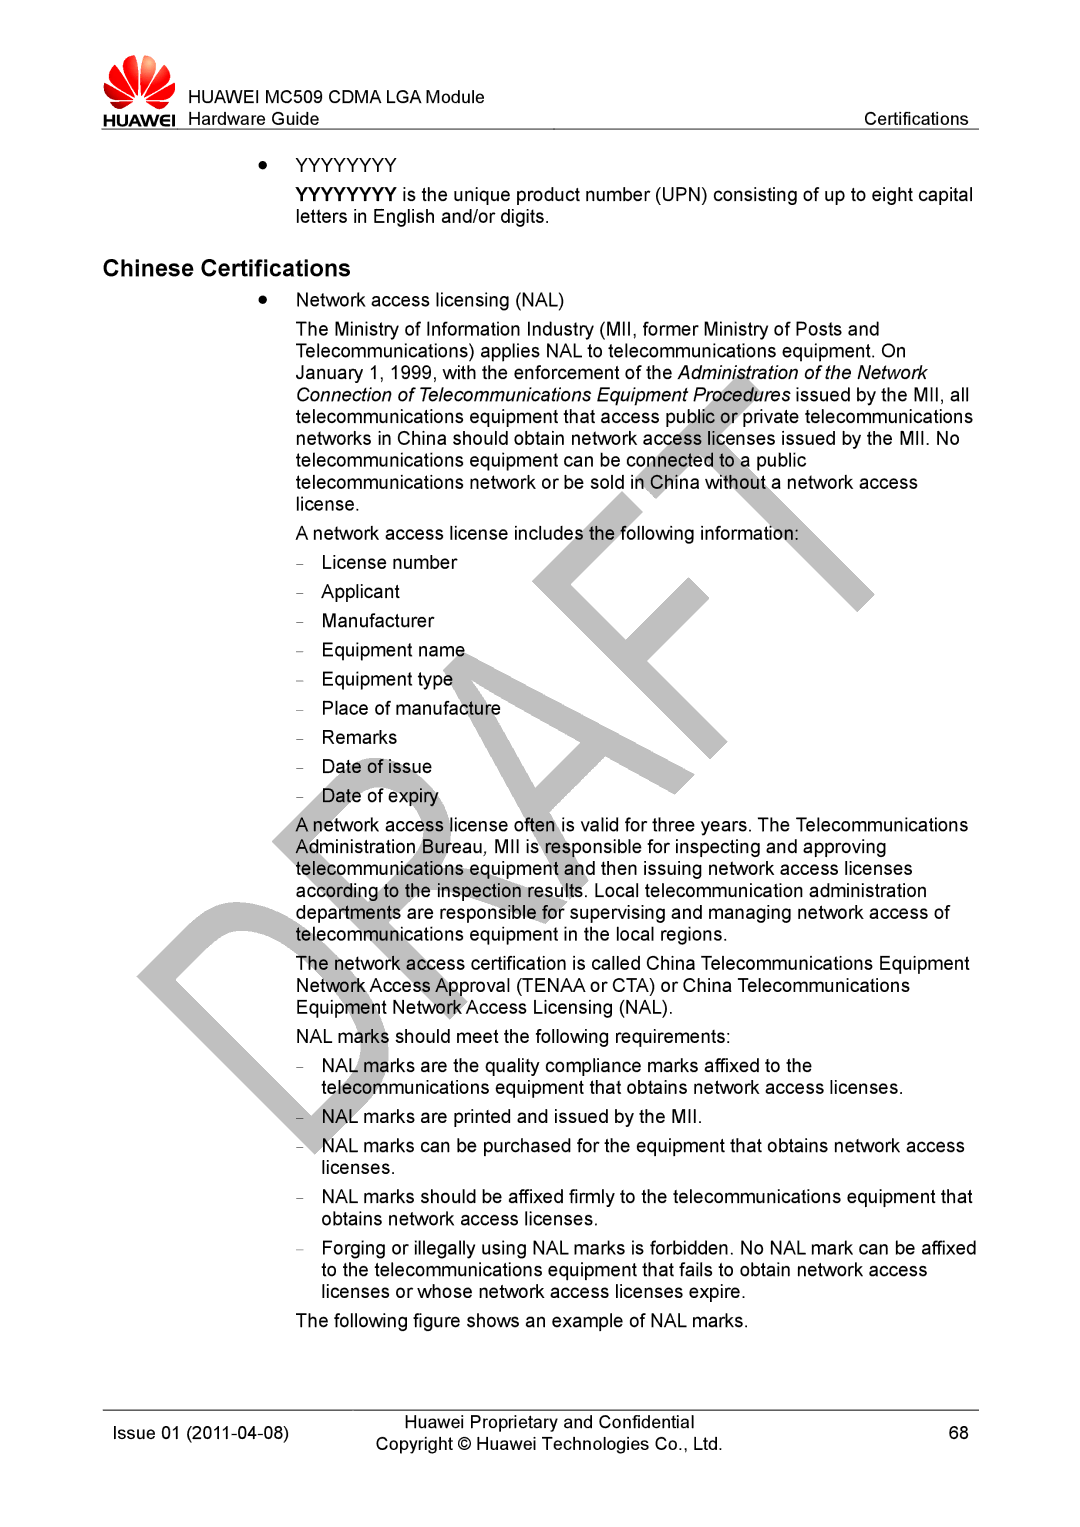 Huawei MC509 CDMA LGA manual Chinese Certifications,  Yyyyyyyy 